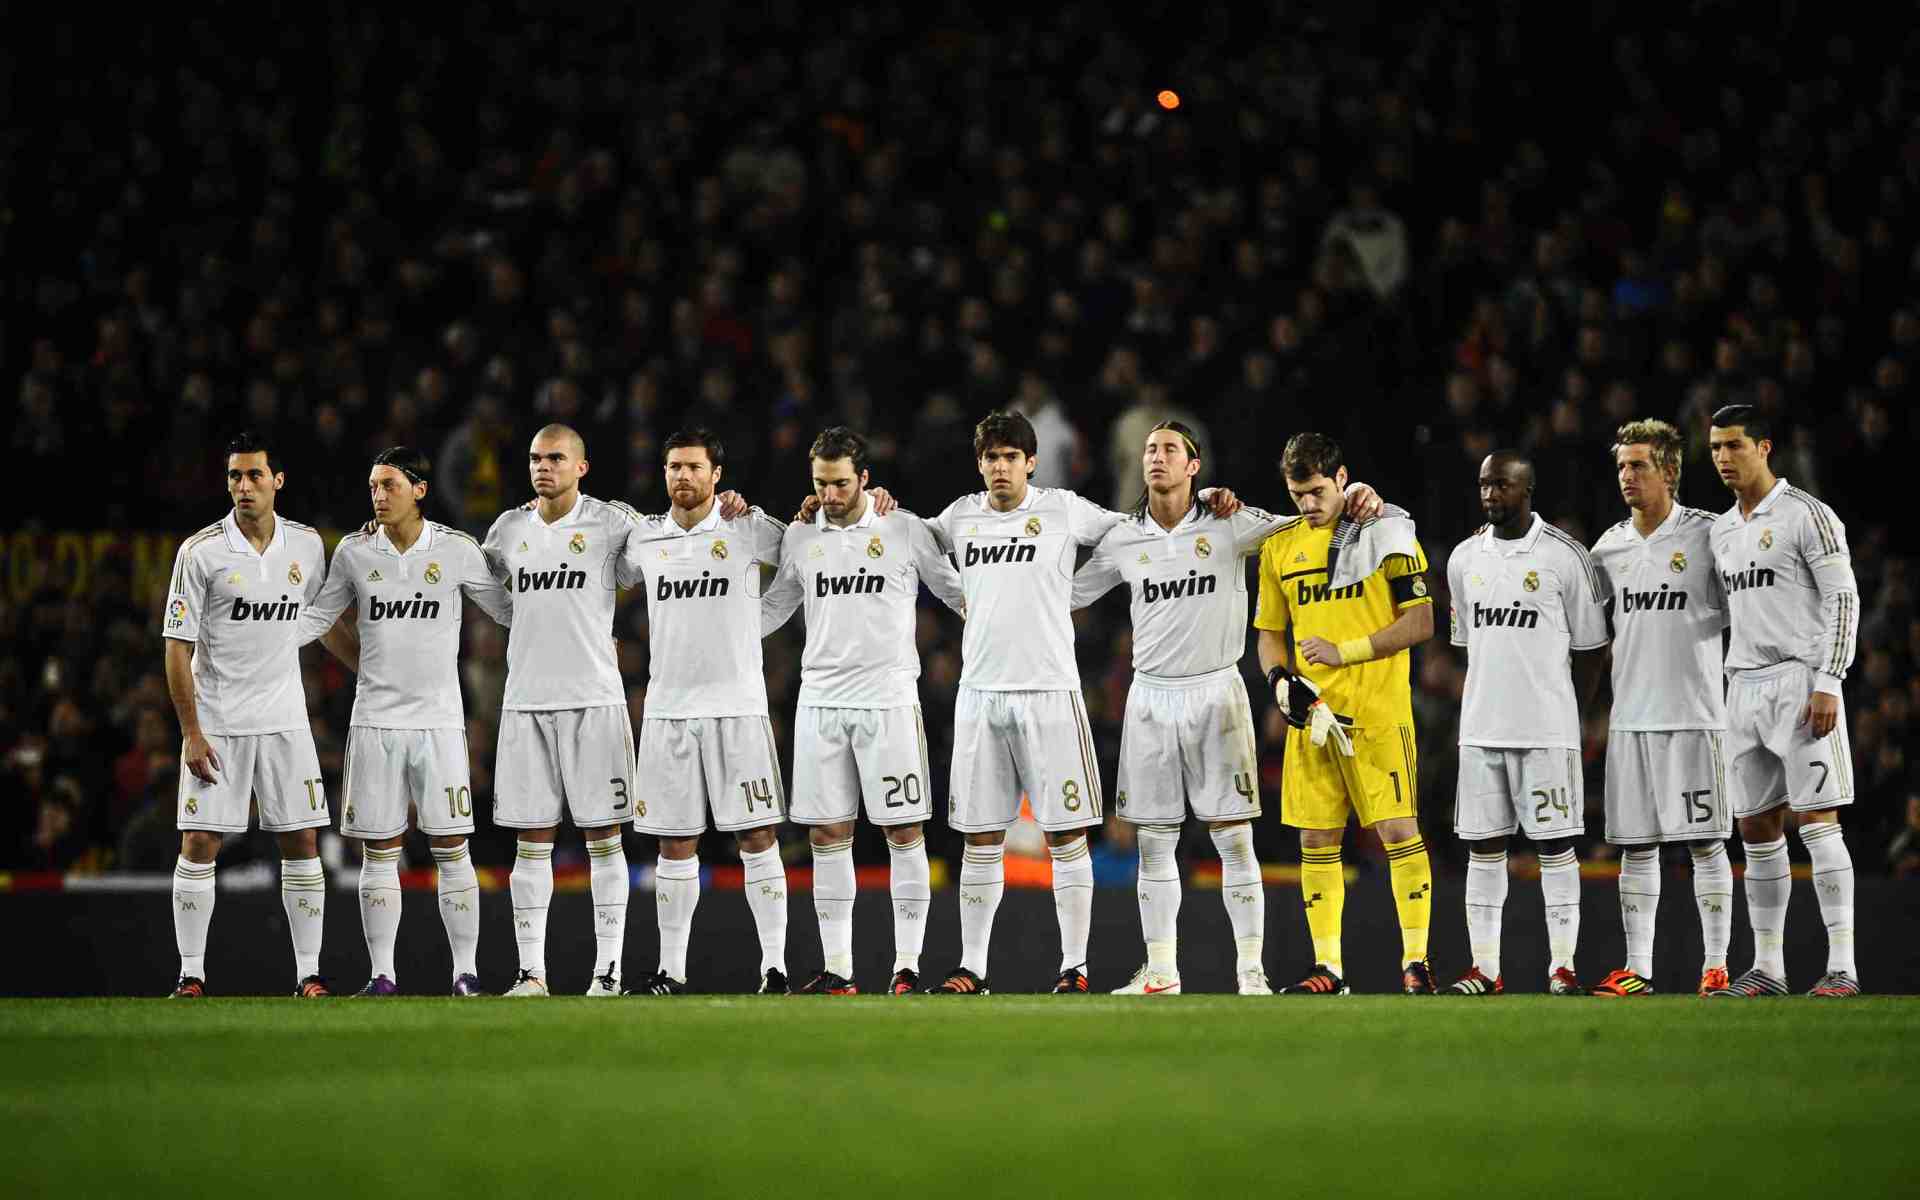 Real Madrid Wallpaper. Real Madrid Image Free